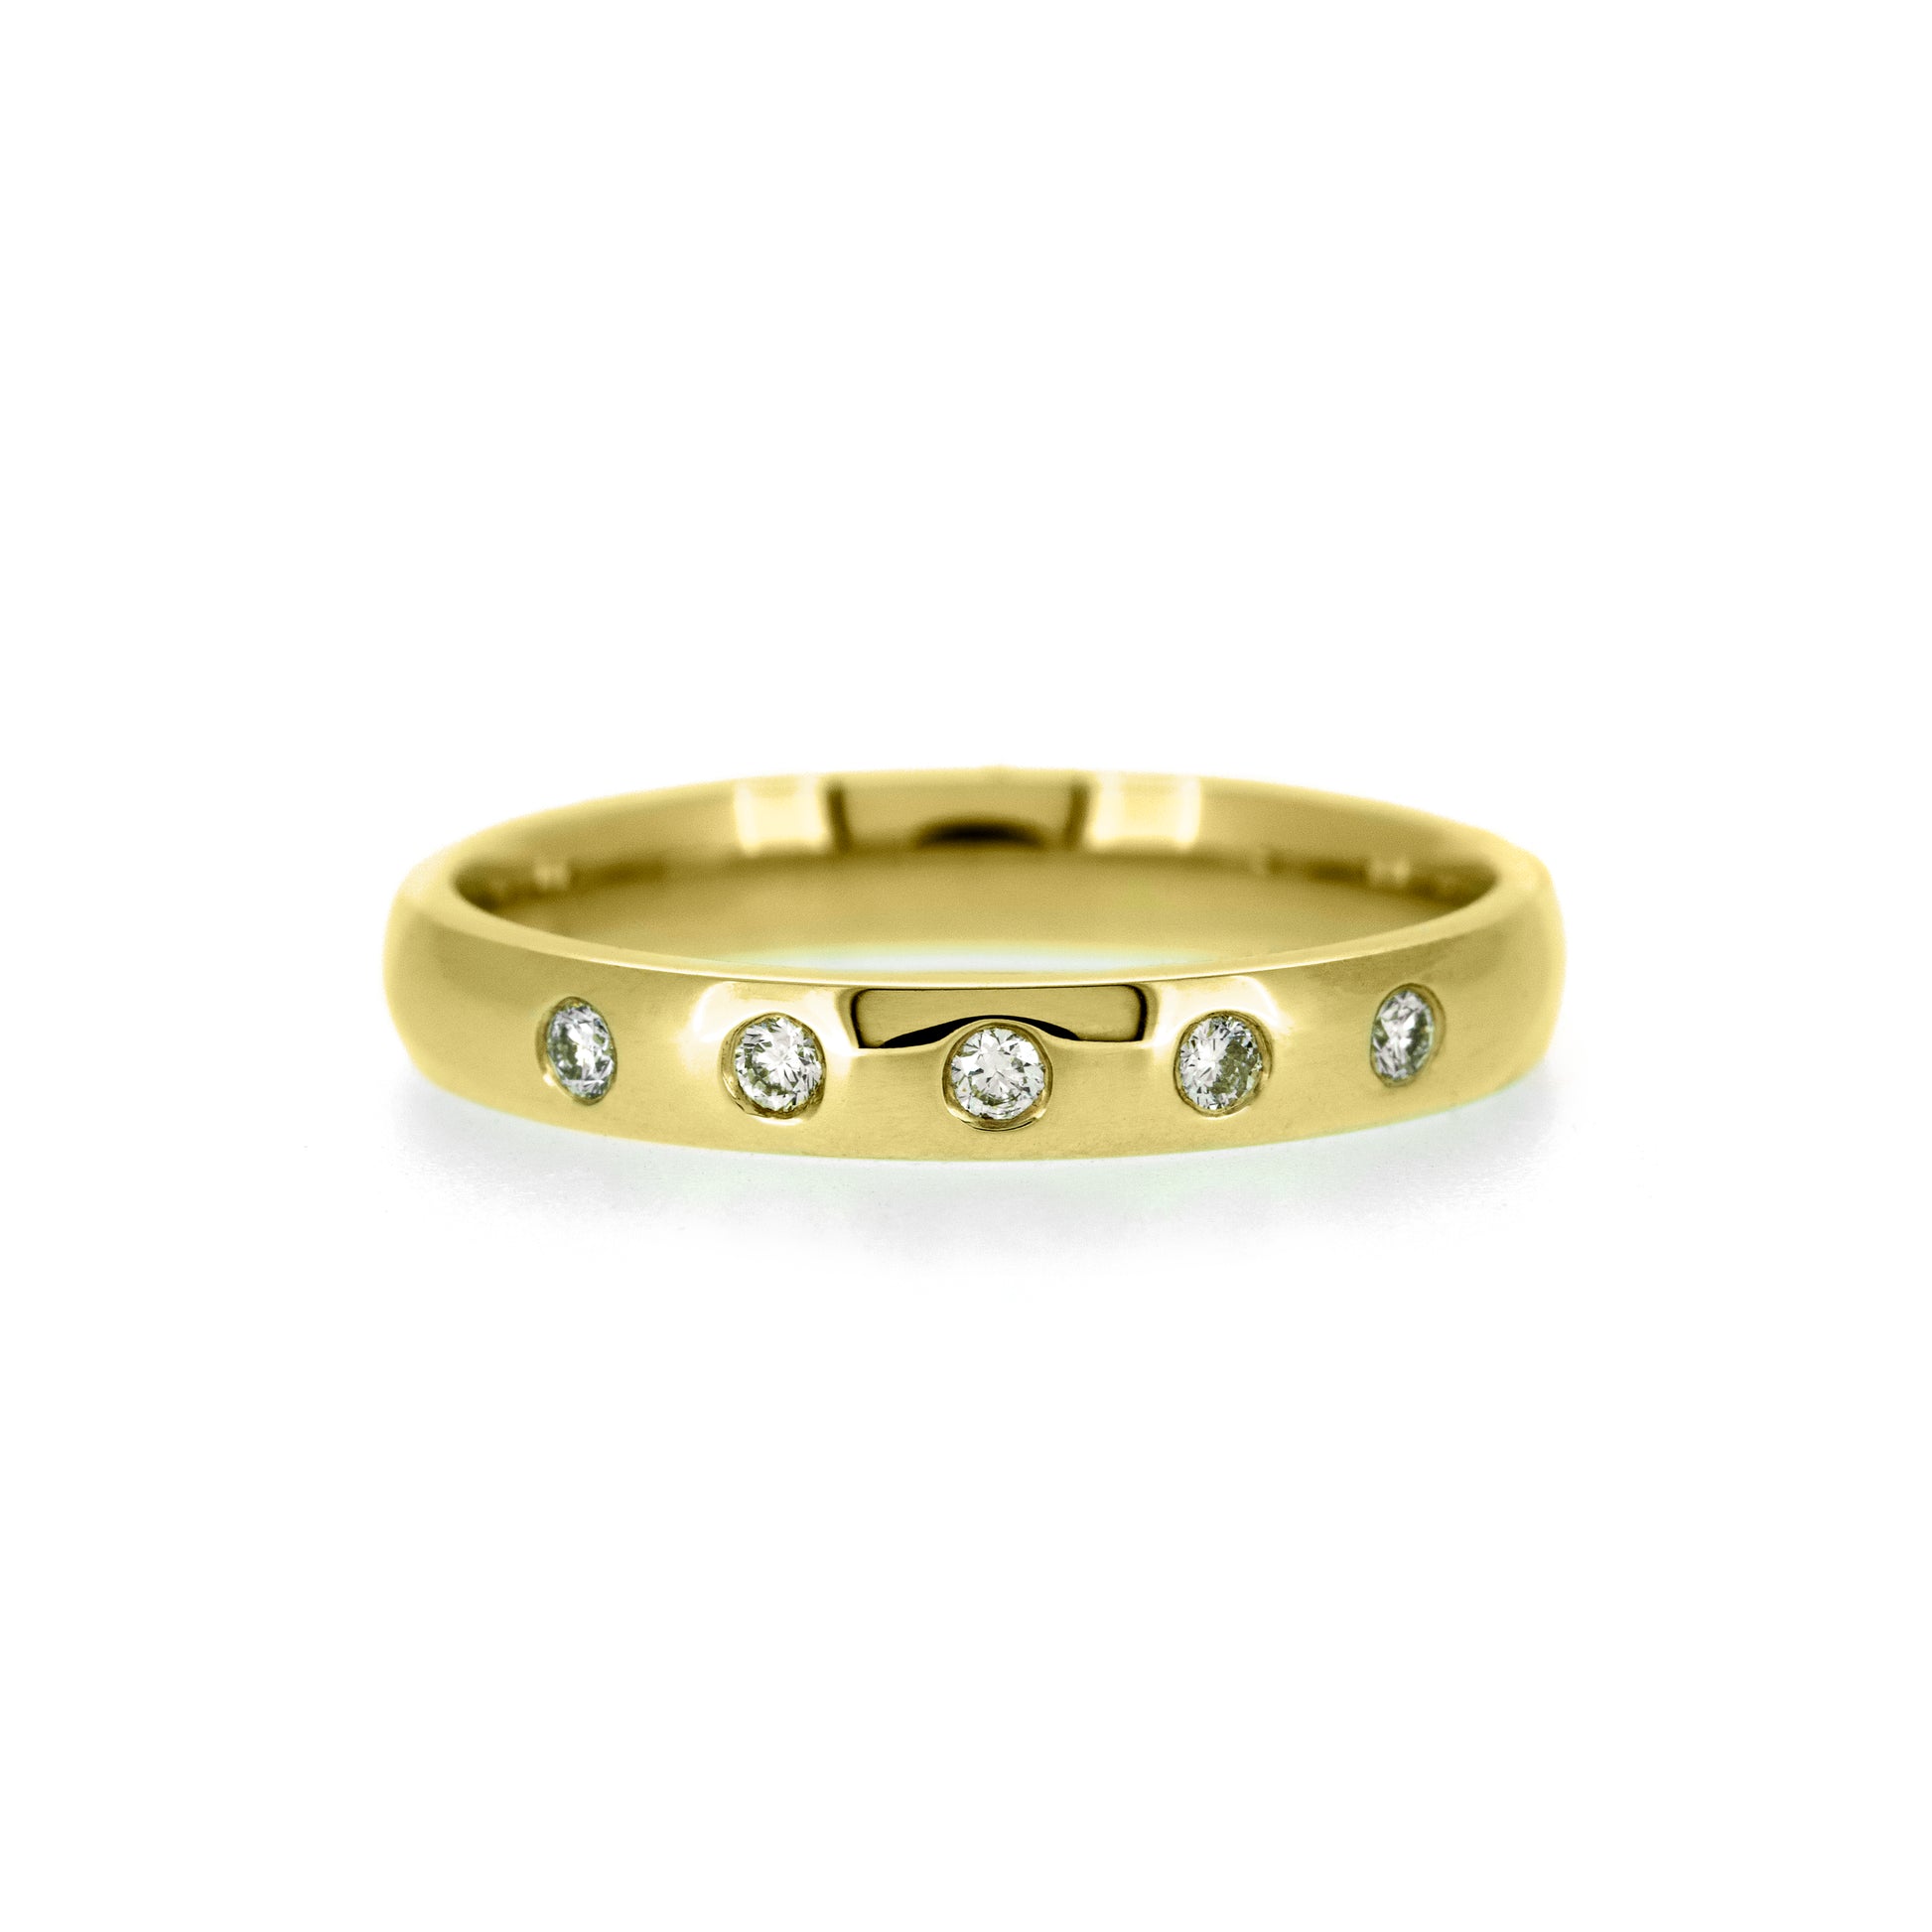 Wedding ring flush set with diamonds recycled yellow gold diamond wedding band